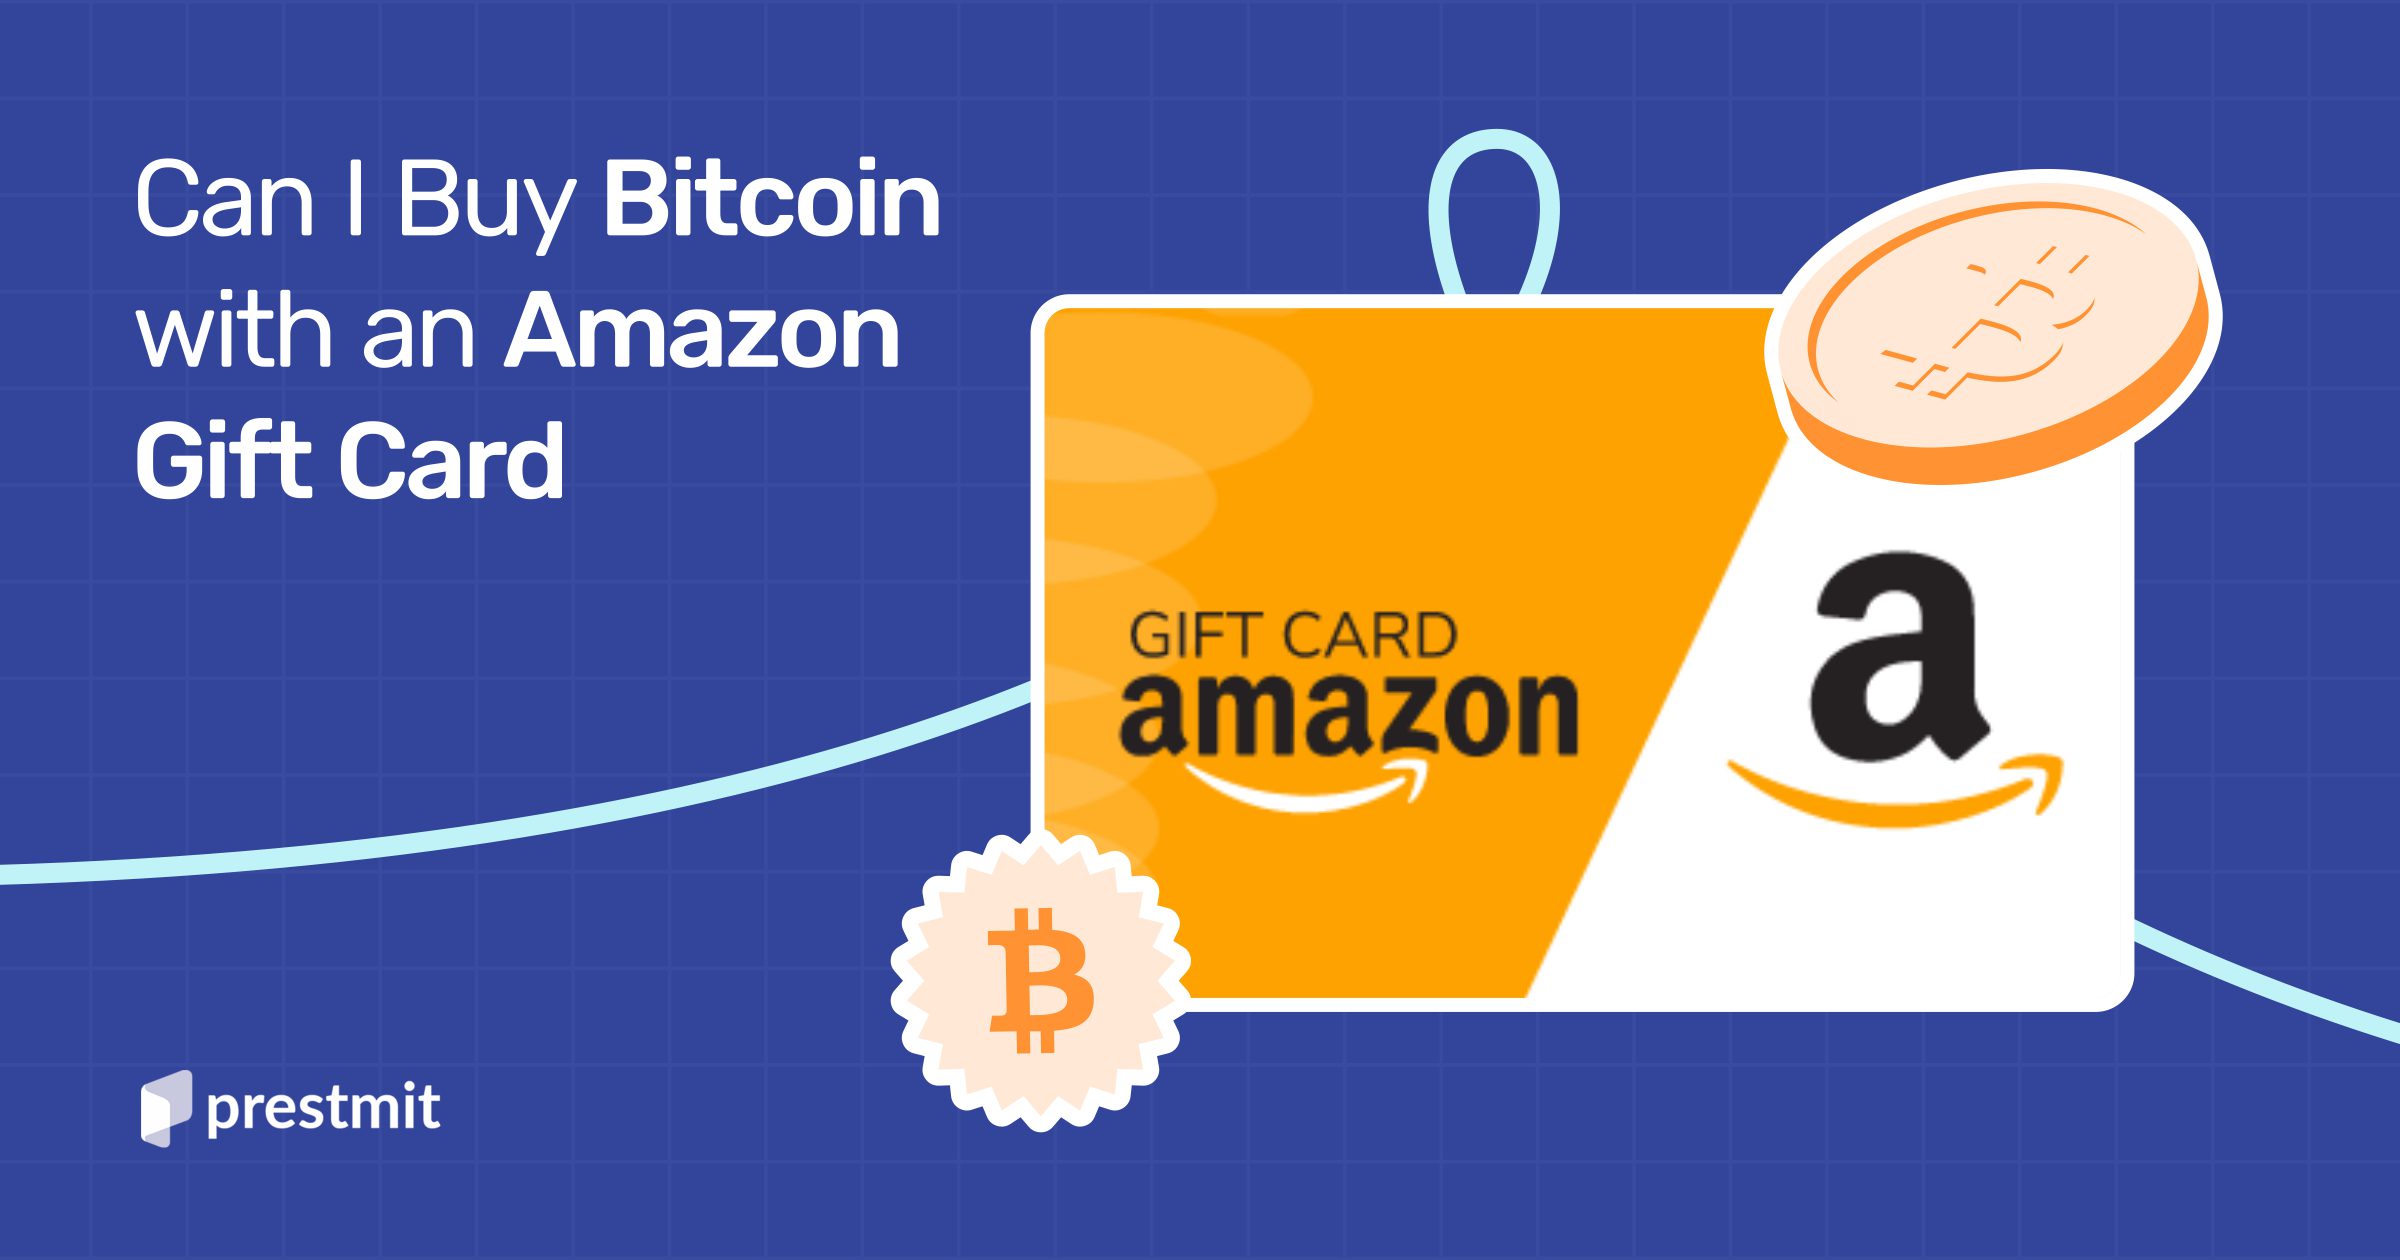 Redeeming an Amazon.com gift card